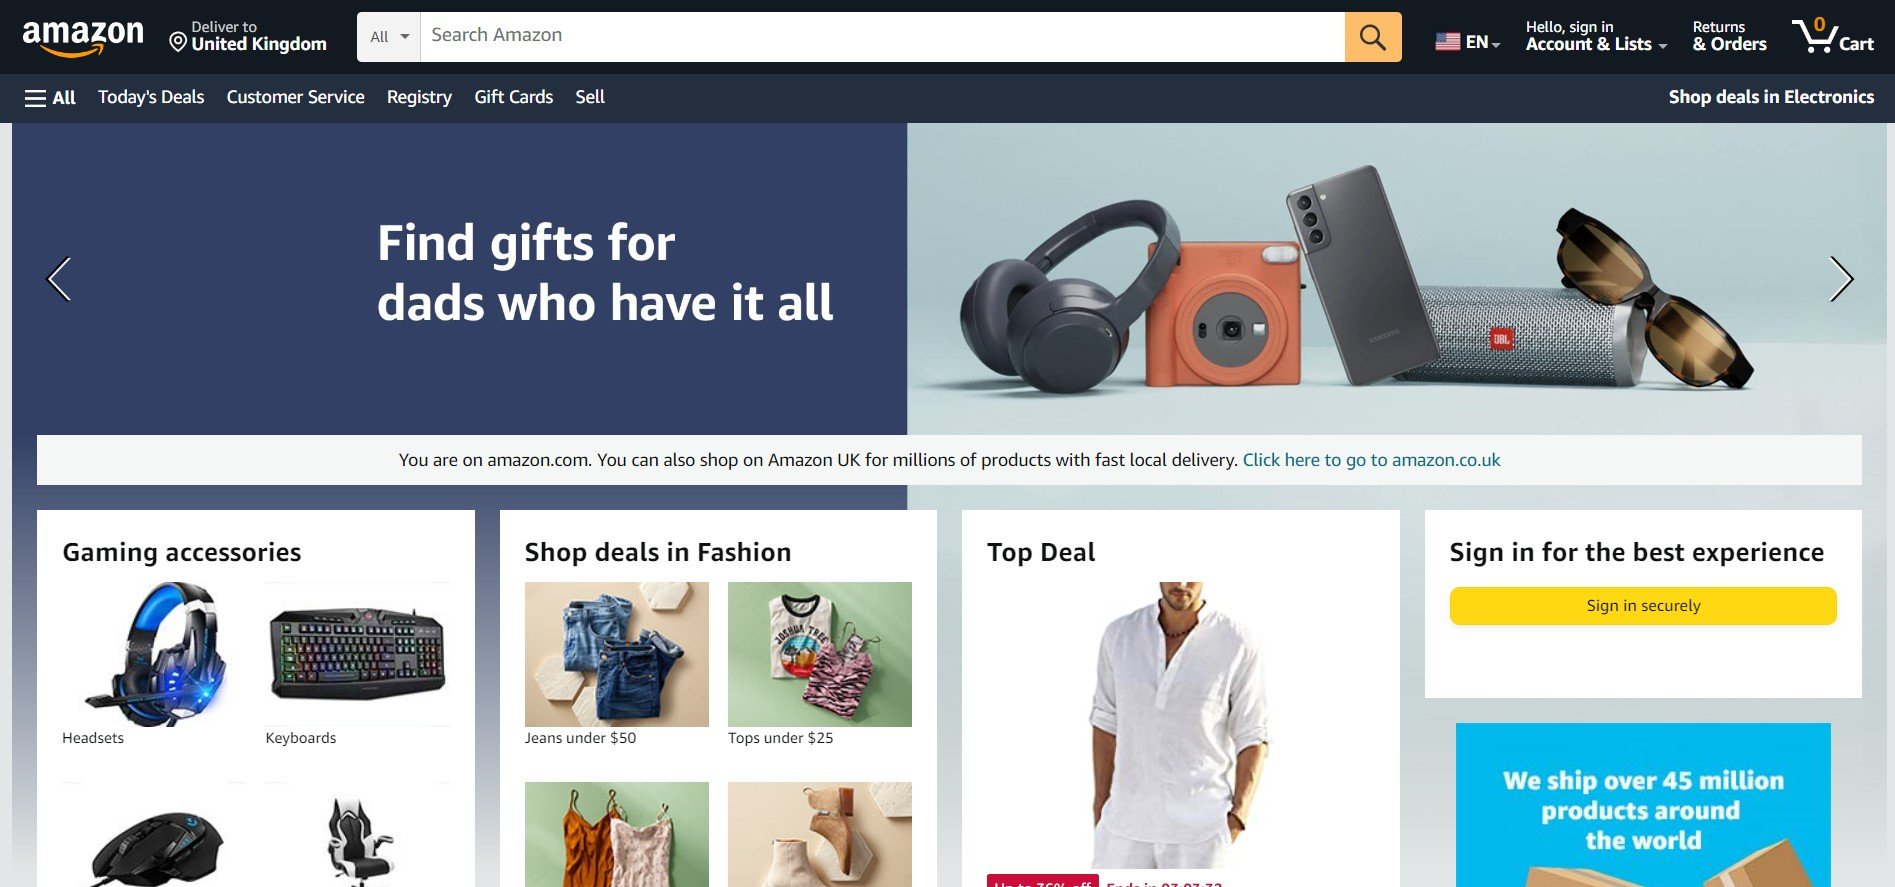 Amazon eCommerce website